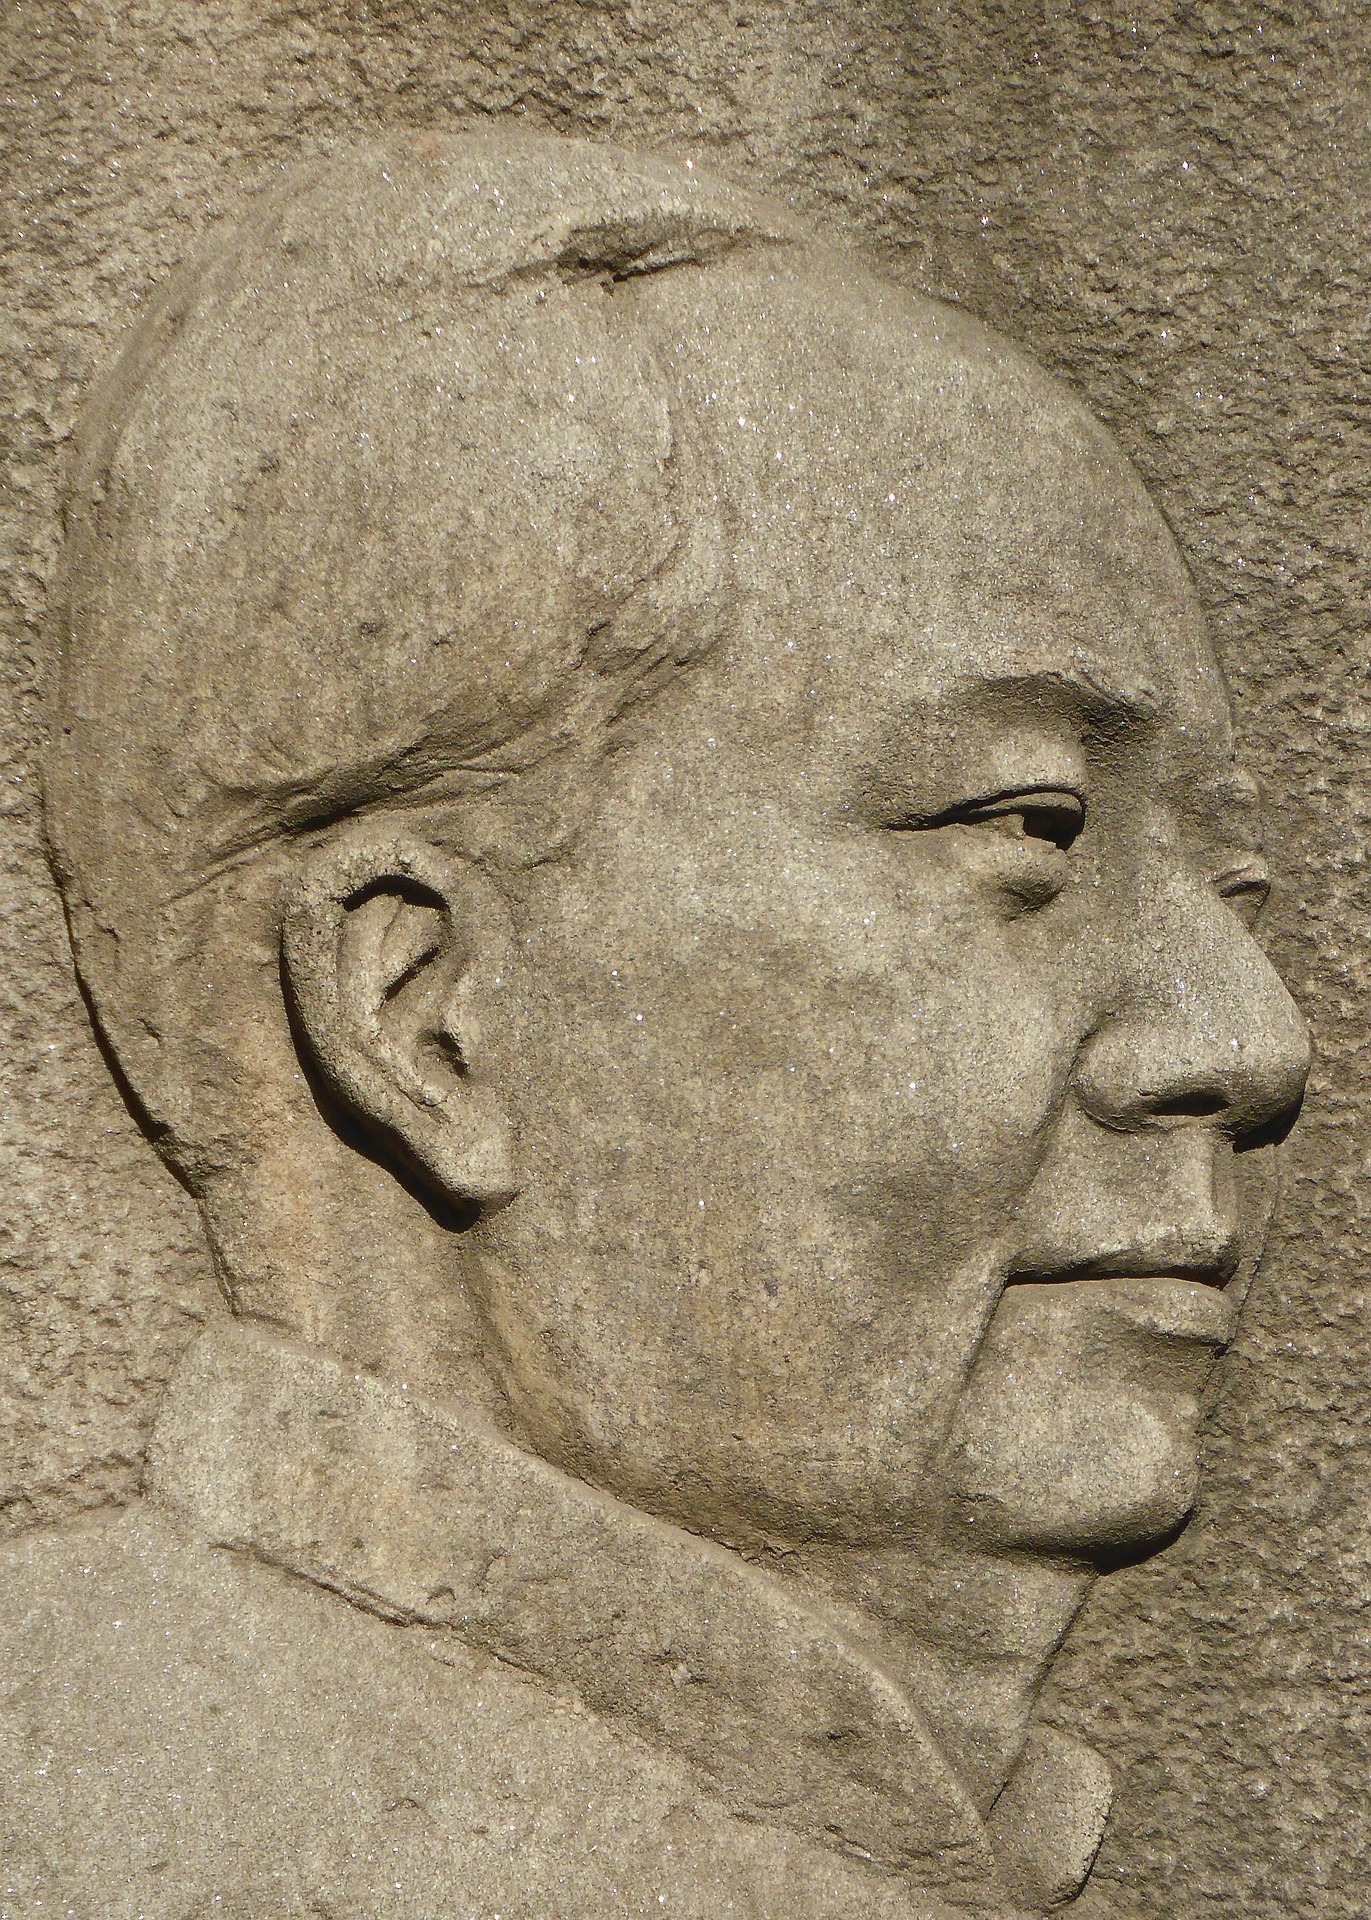 Quem foi Mao Tse Tung?